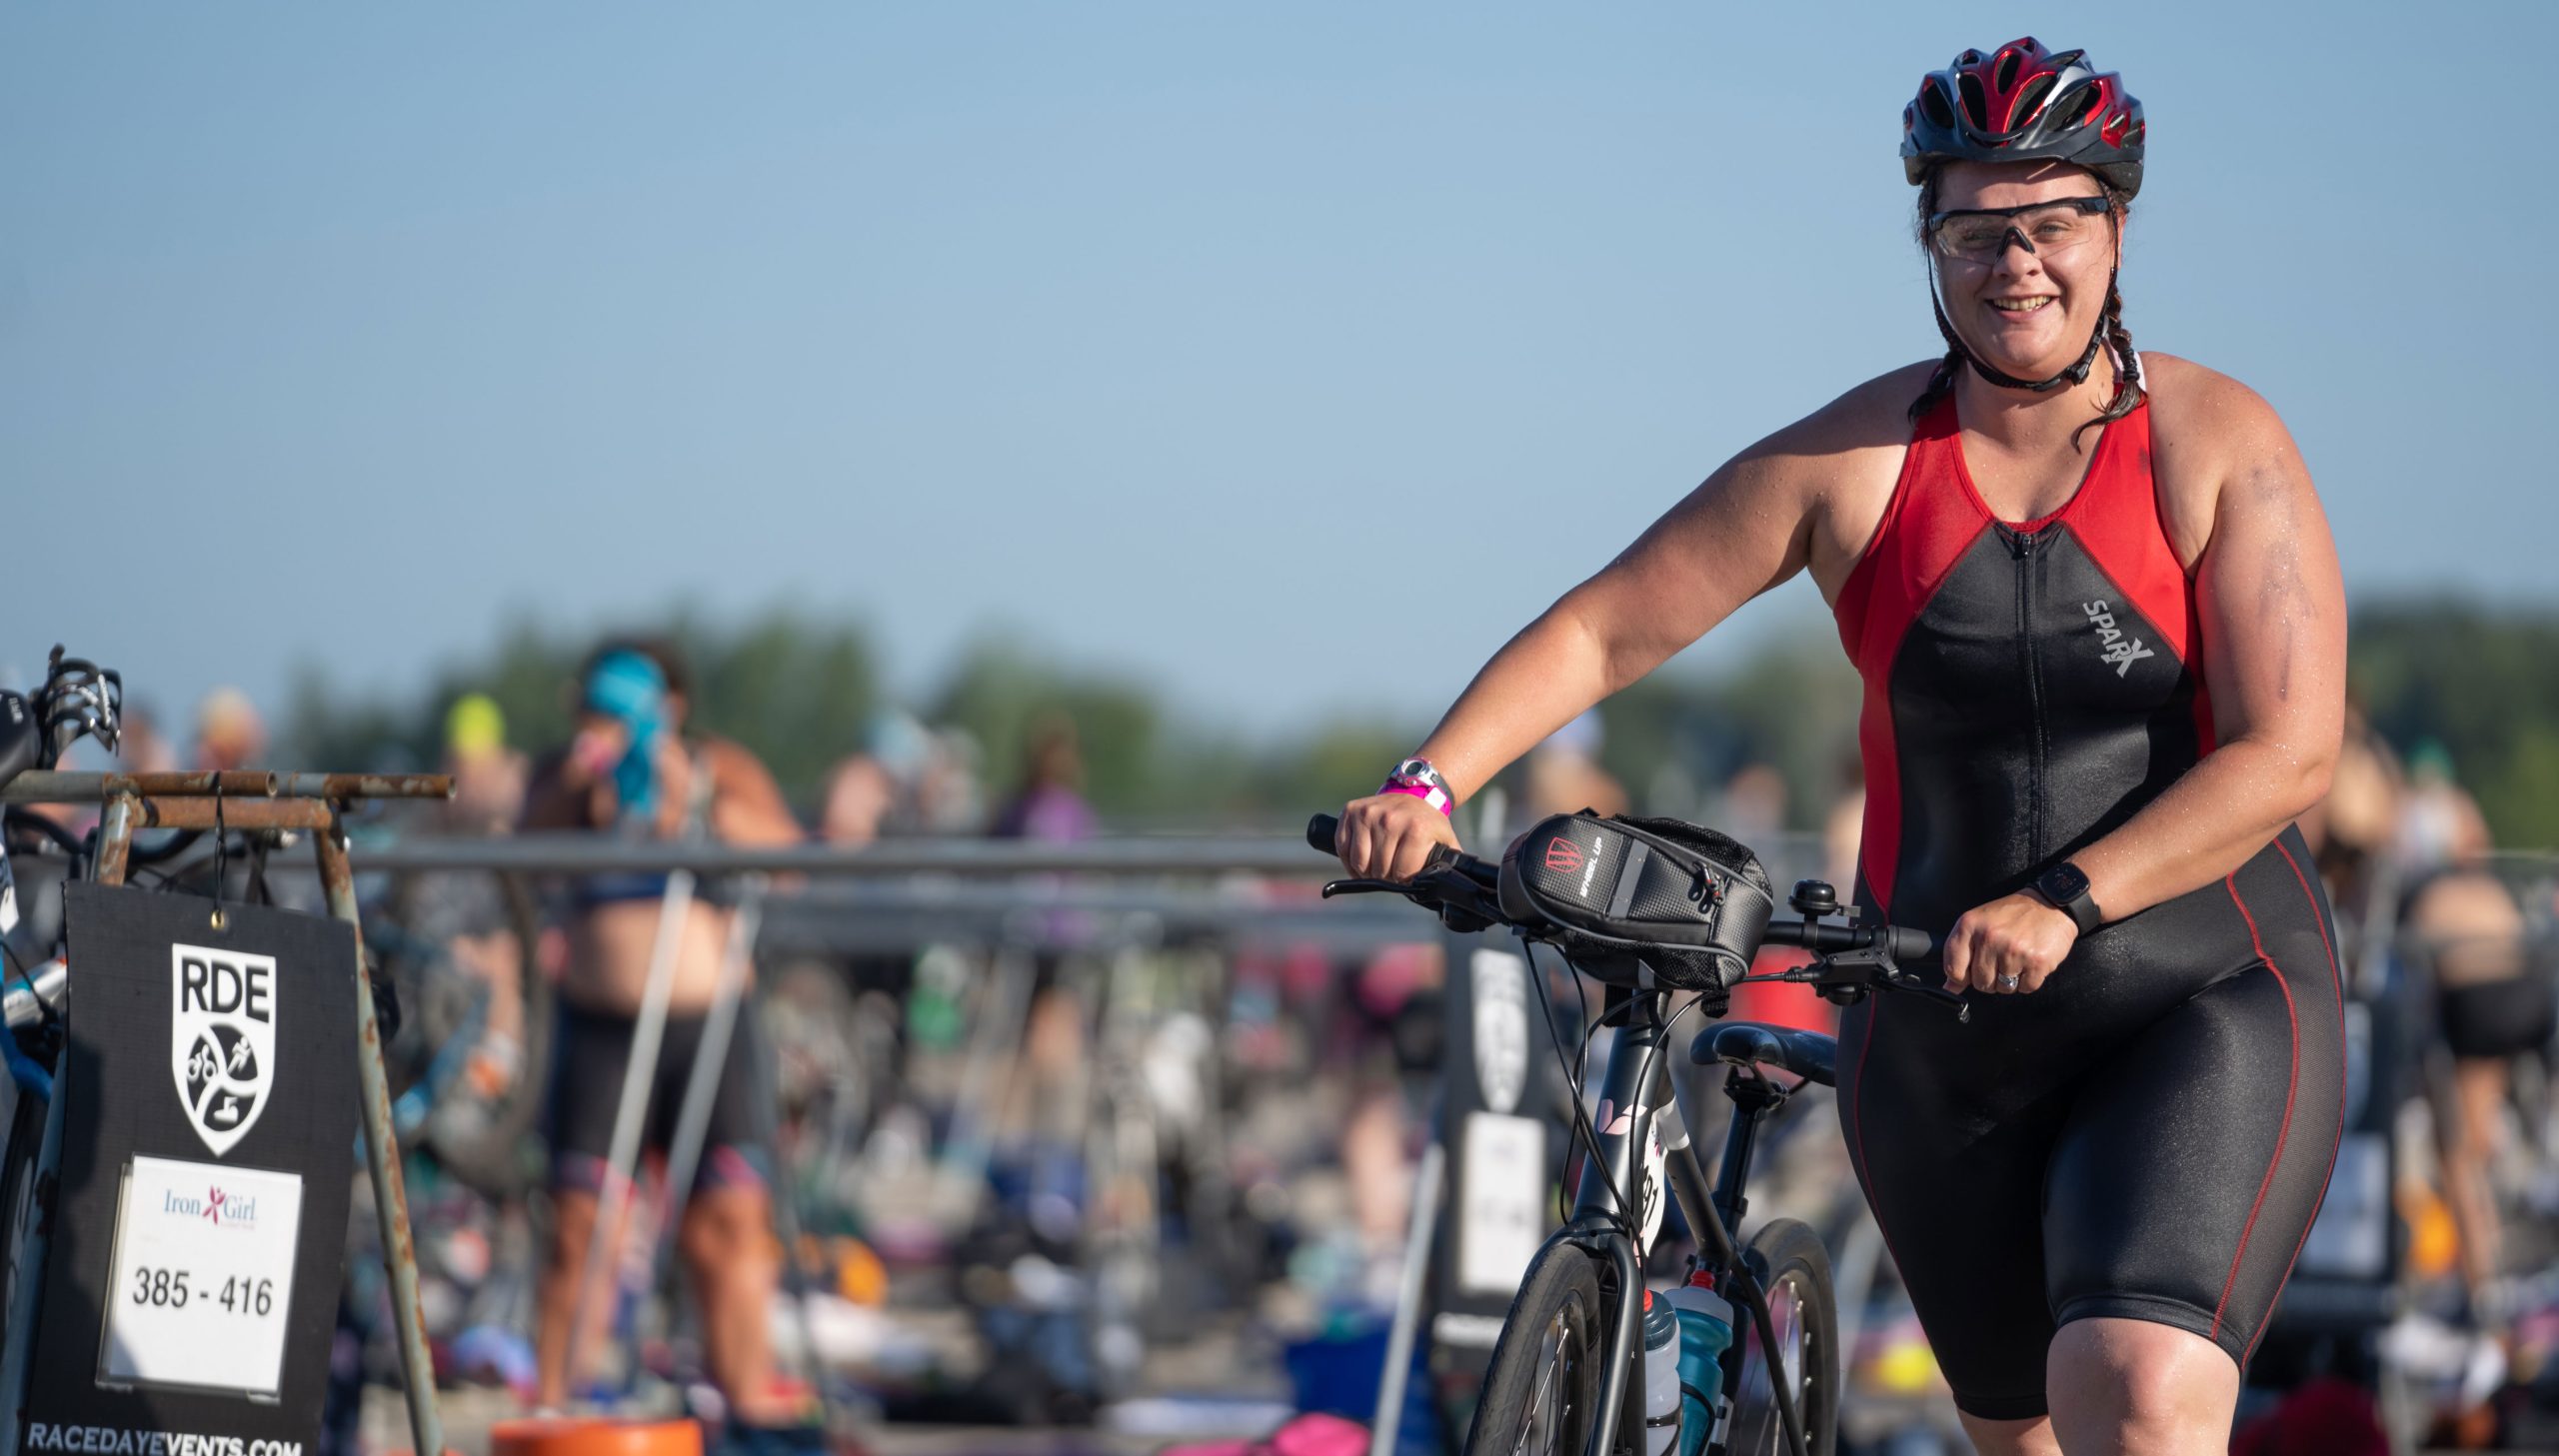 Wisconsin Women’s Triathlon set for Sunday at the Pleasant Praire